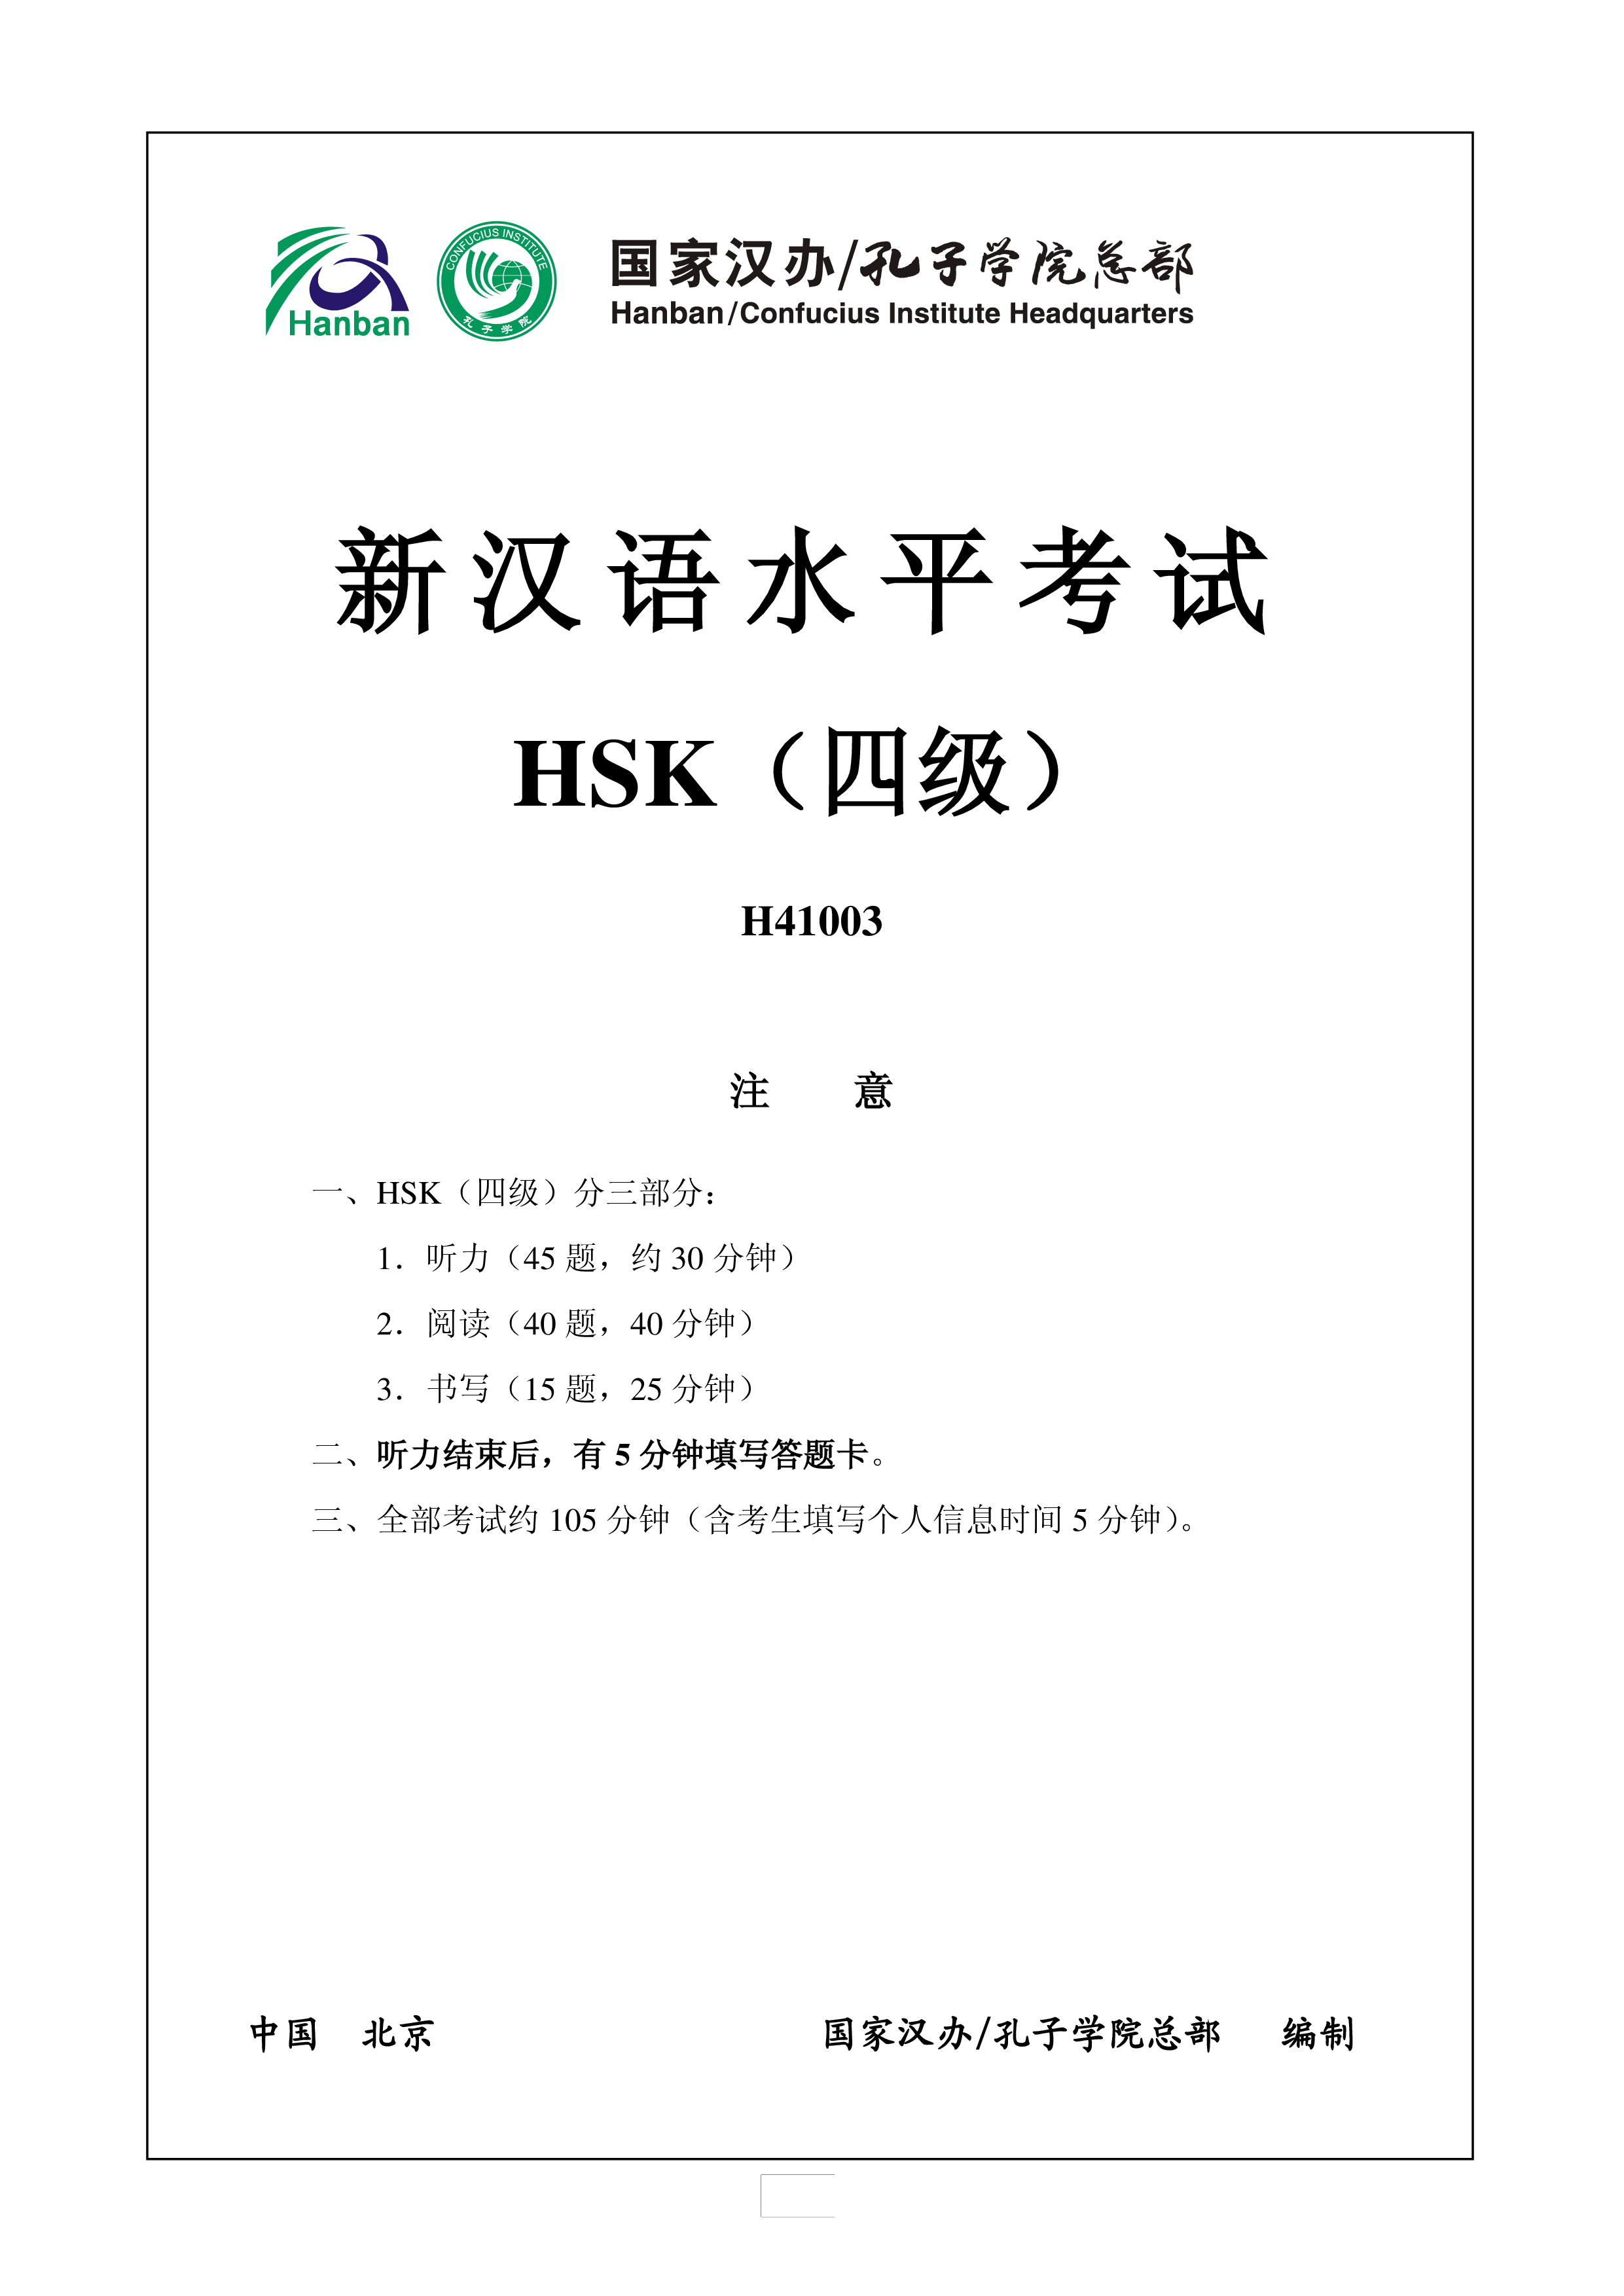 HSK H41003 main image